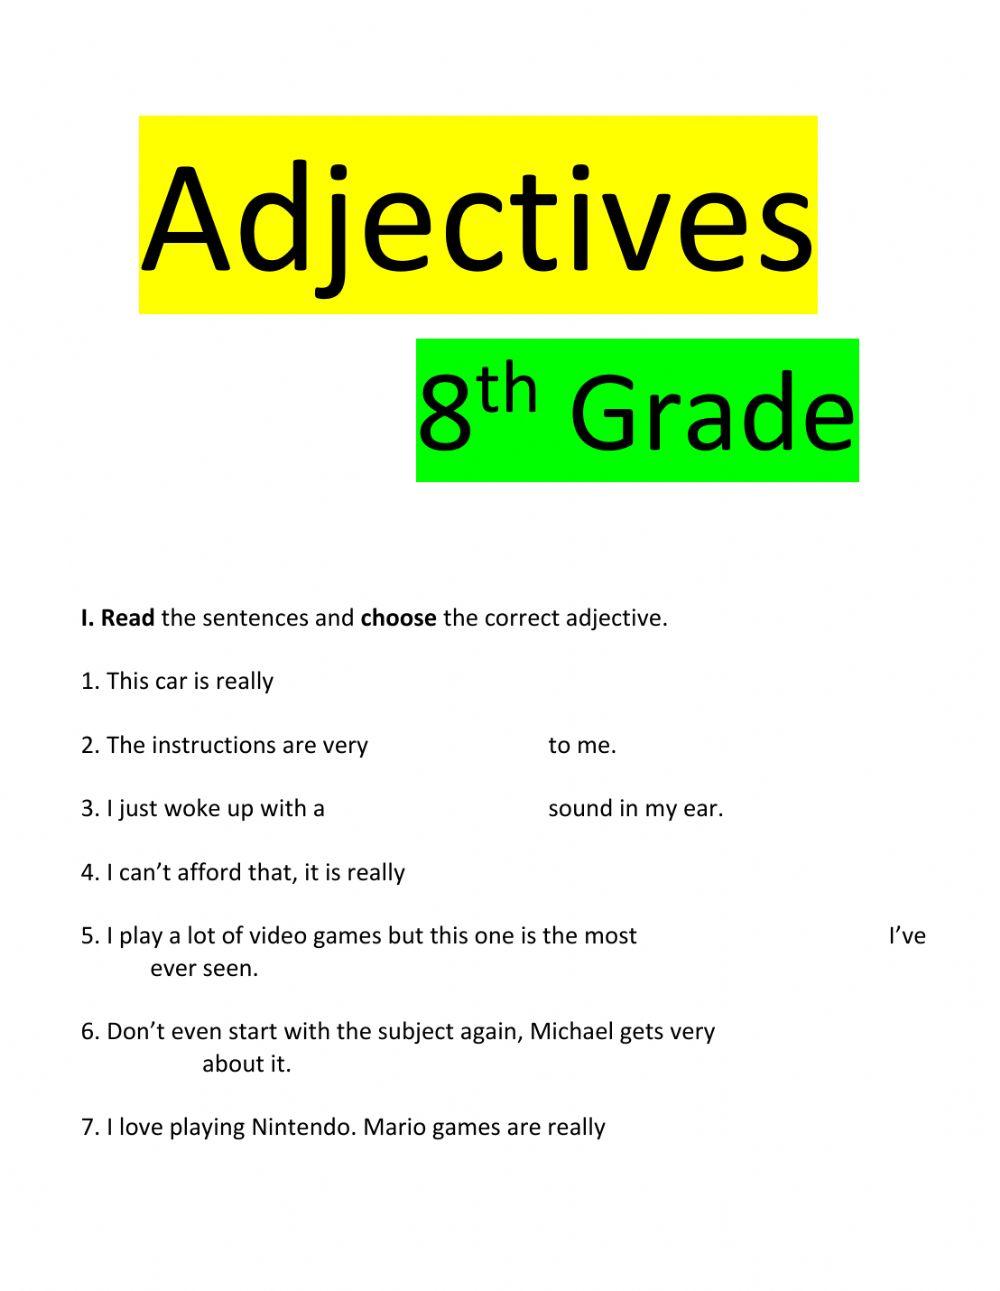 Adjectives 8th grade